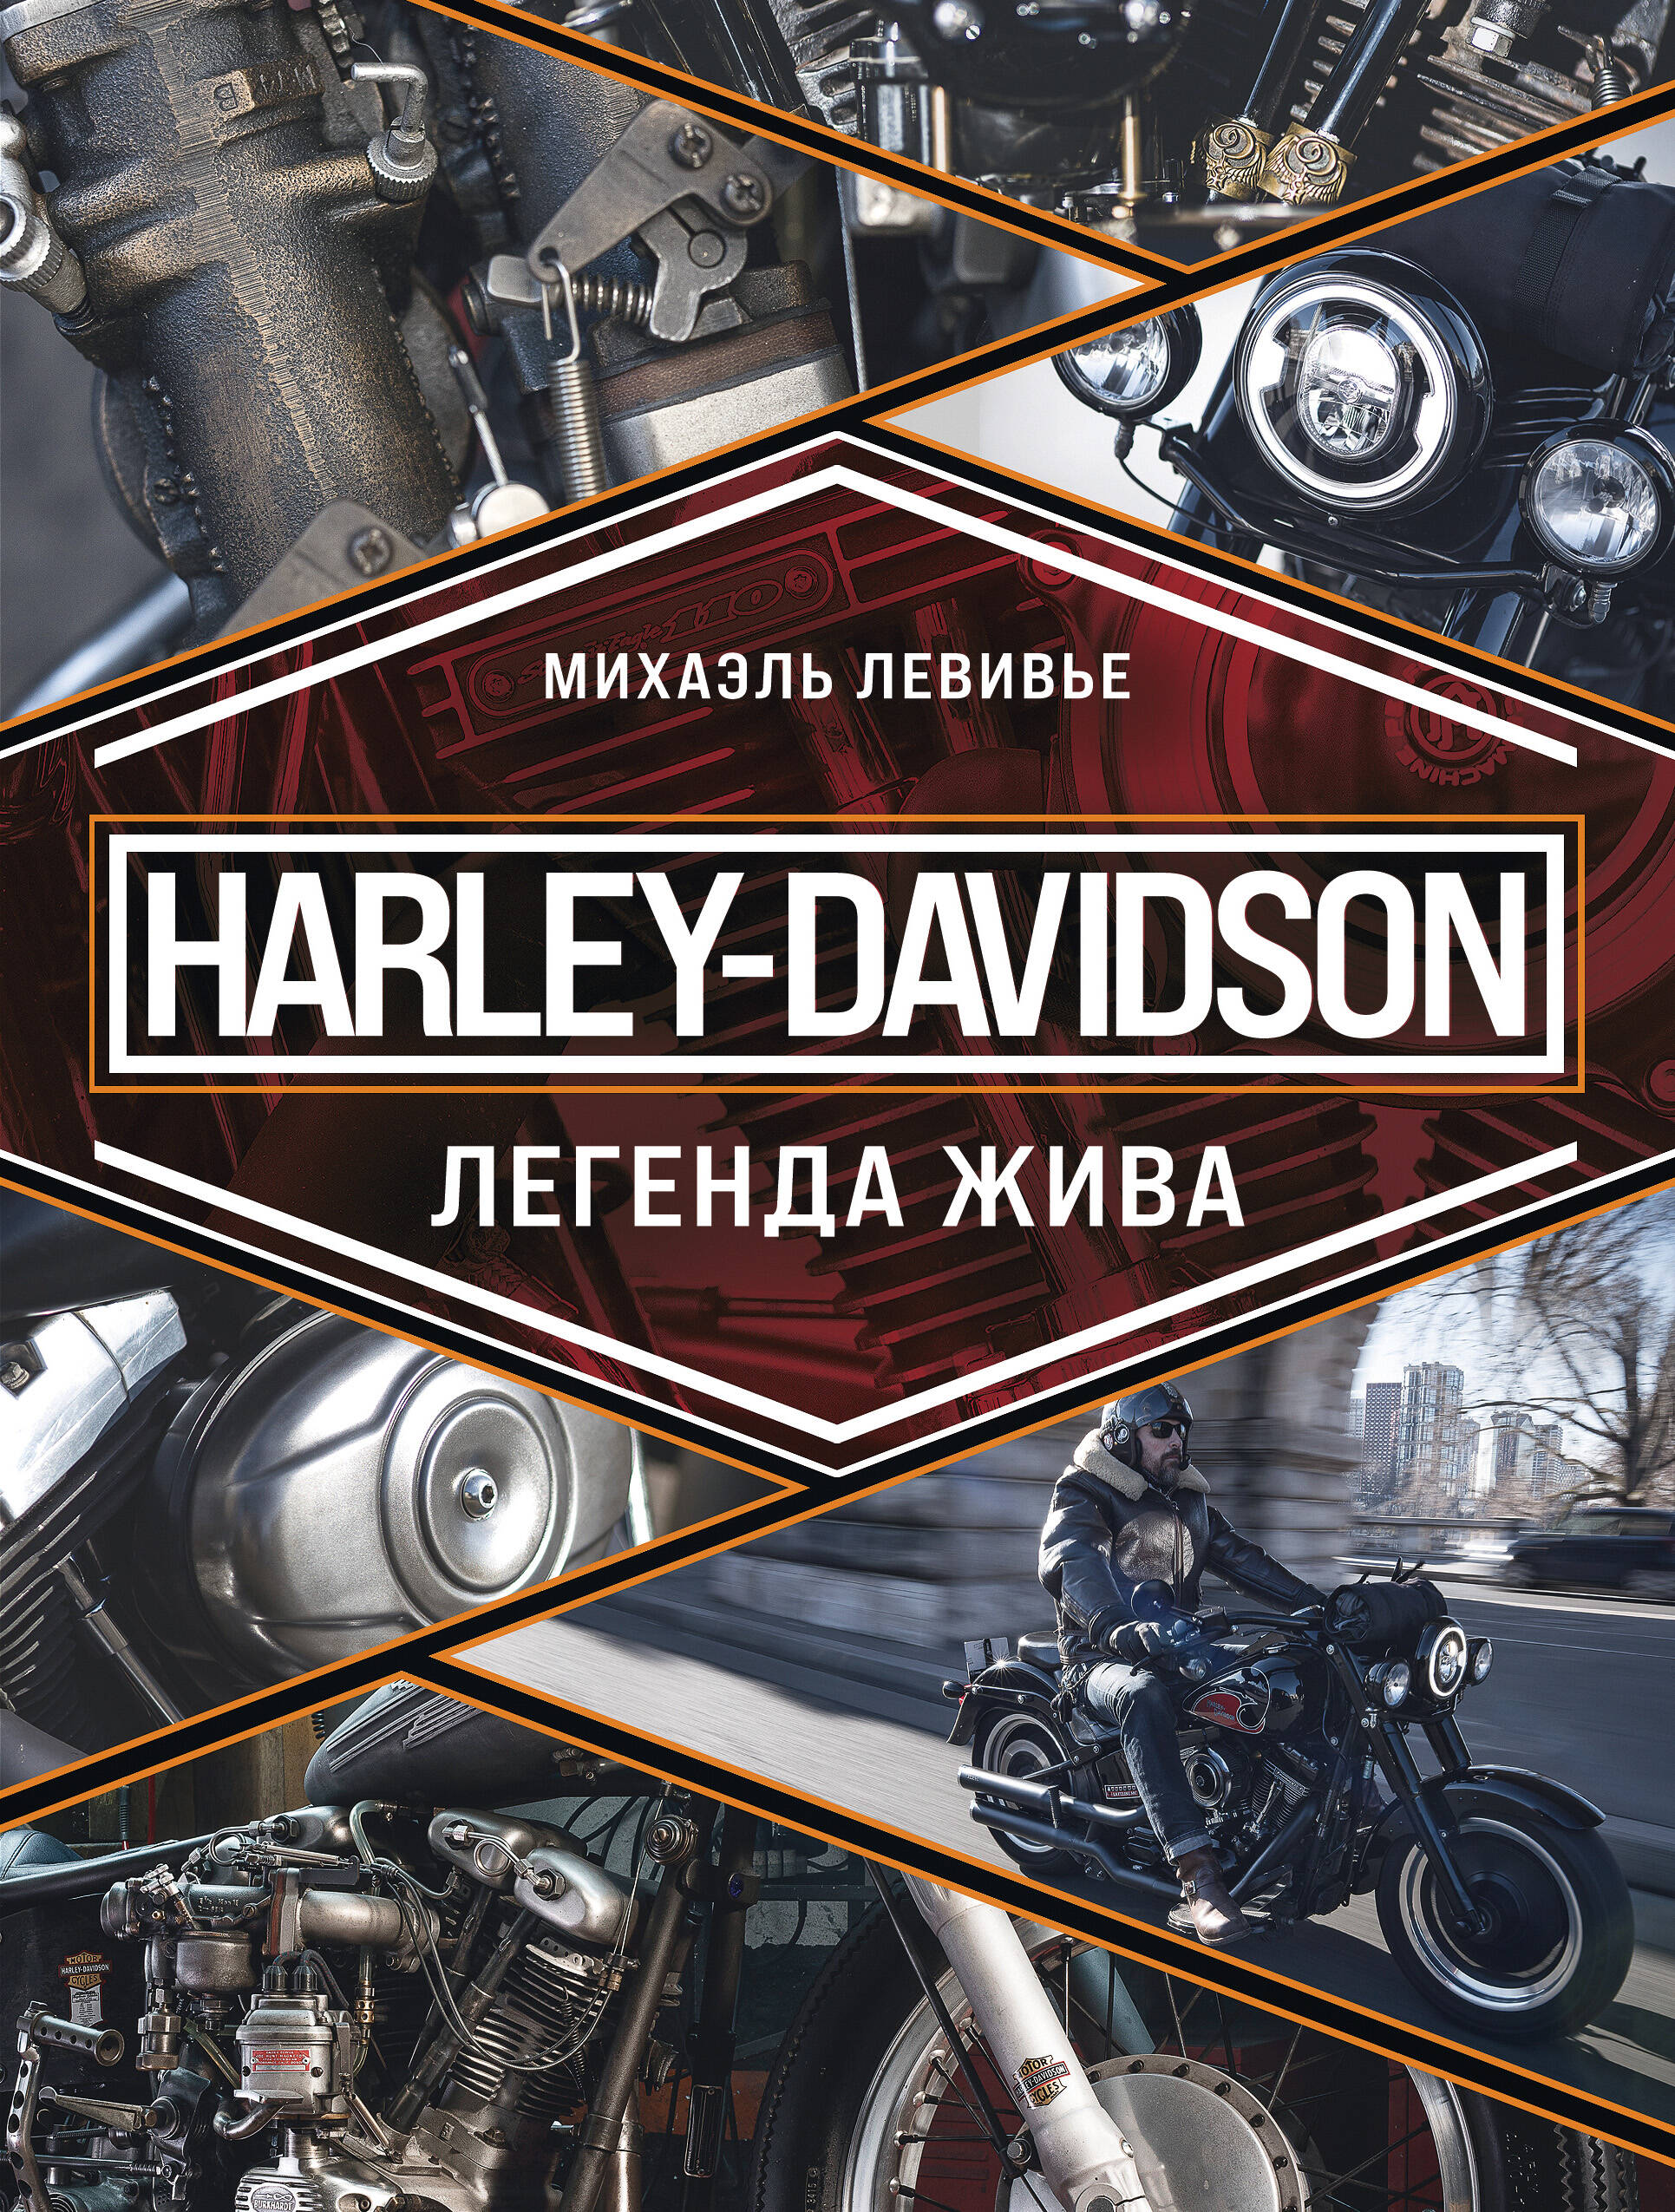 Левивье Михаэль Harley-Davidson. Легенда жива